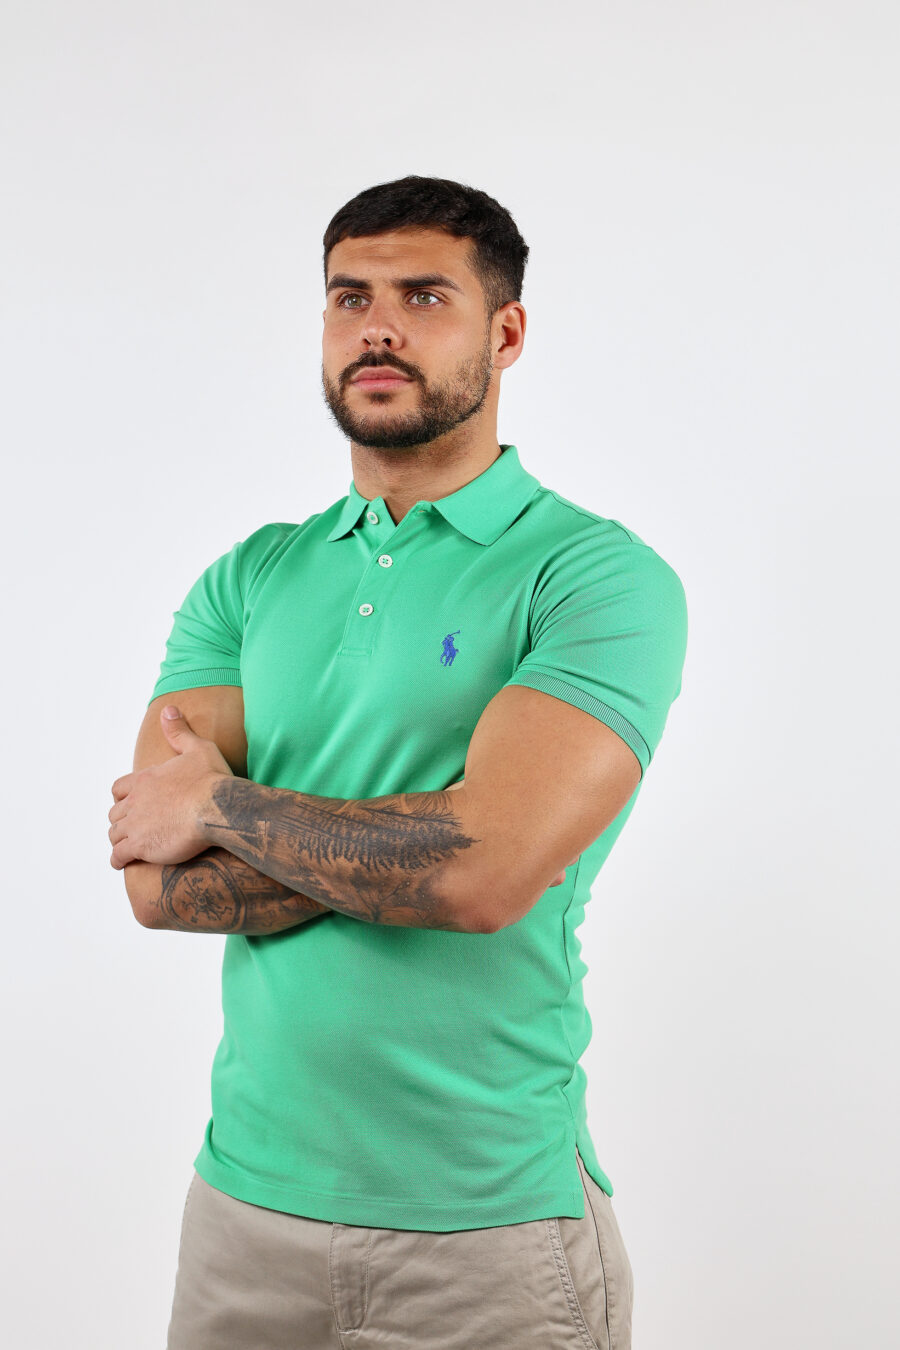 T-shirt verde e azul com mini-logotipo "polo" - BLS Fashion 172